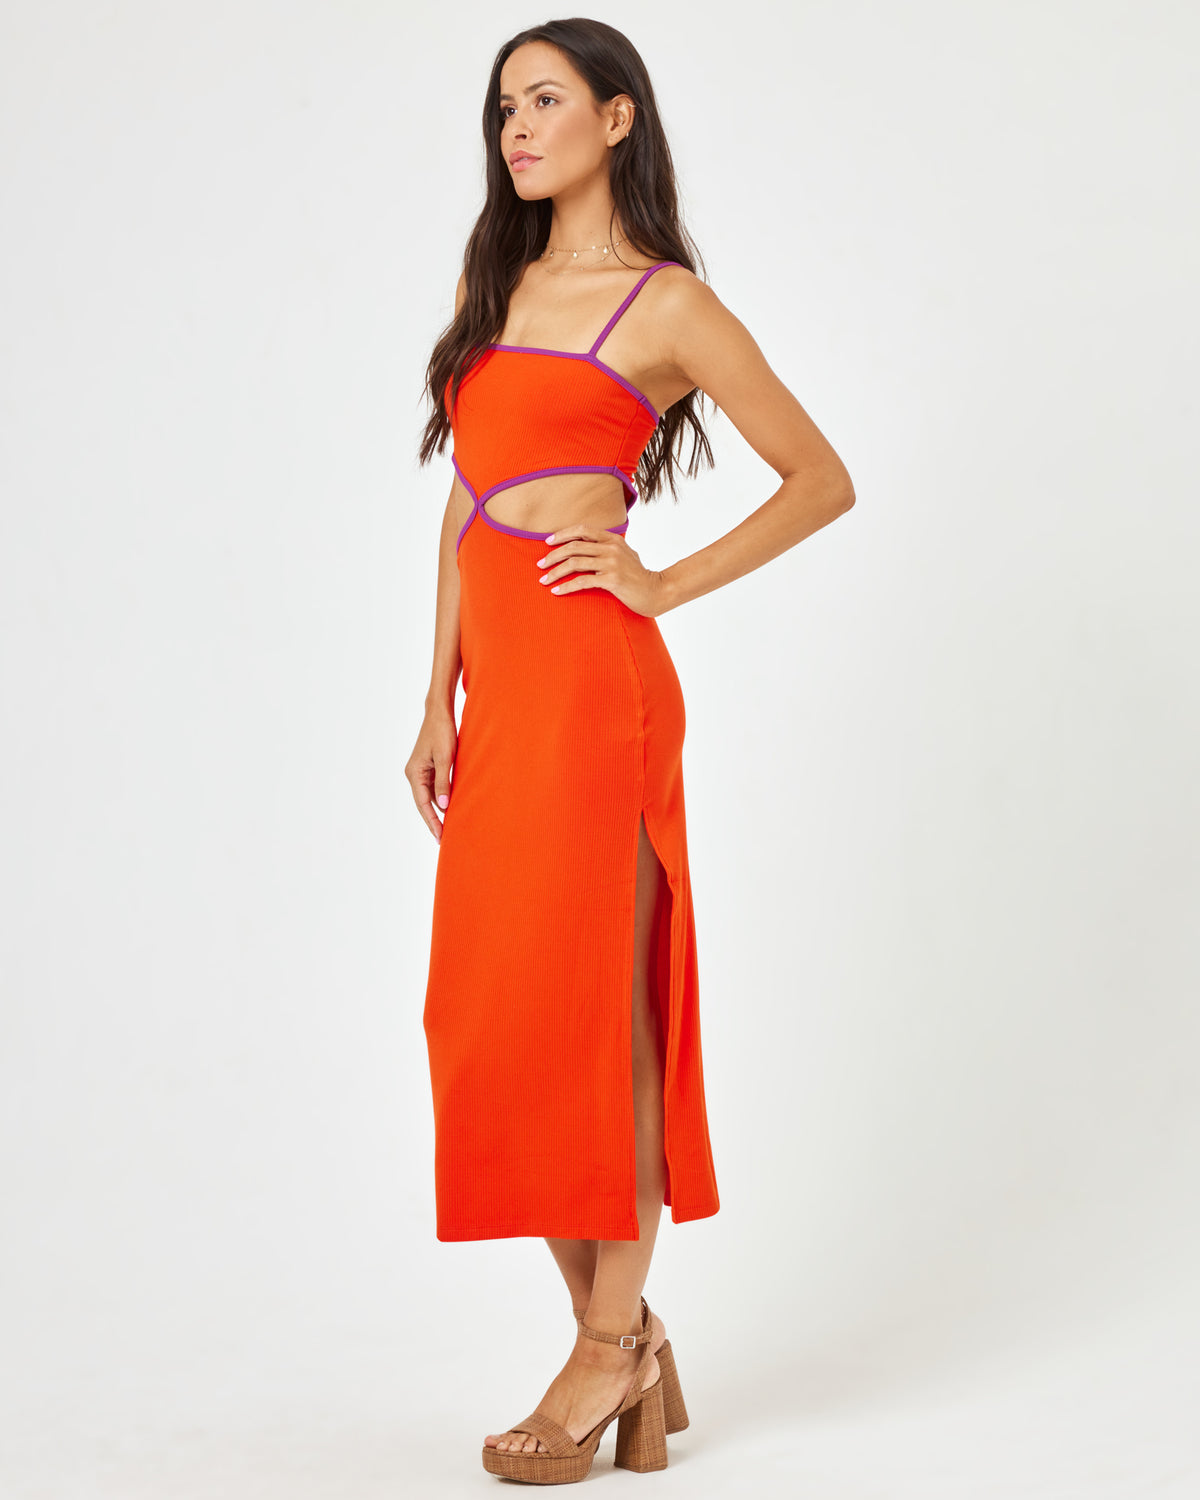 Libra Dress - Berry-Pimento Berry-Pimento | Model: Emily (size: S)